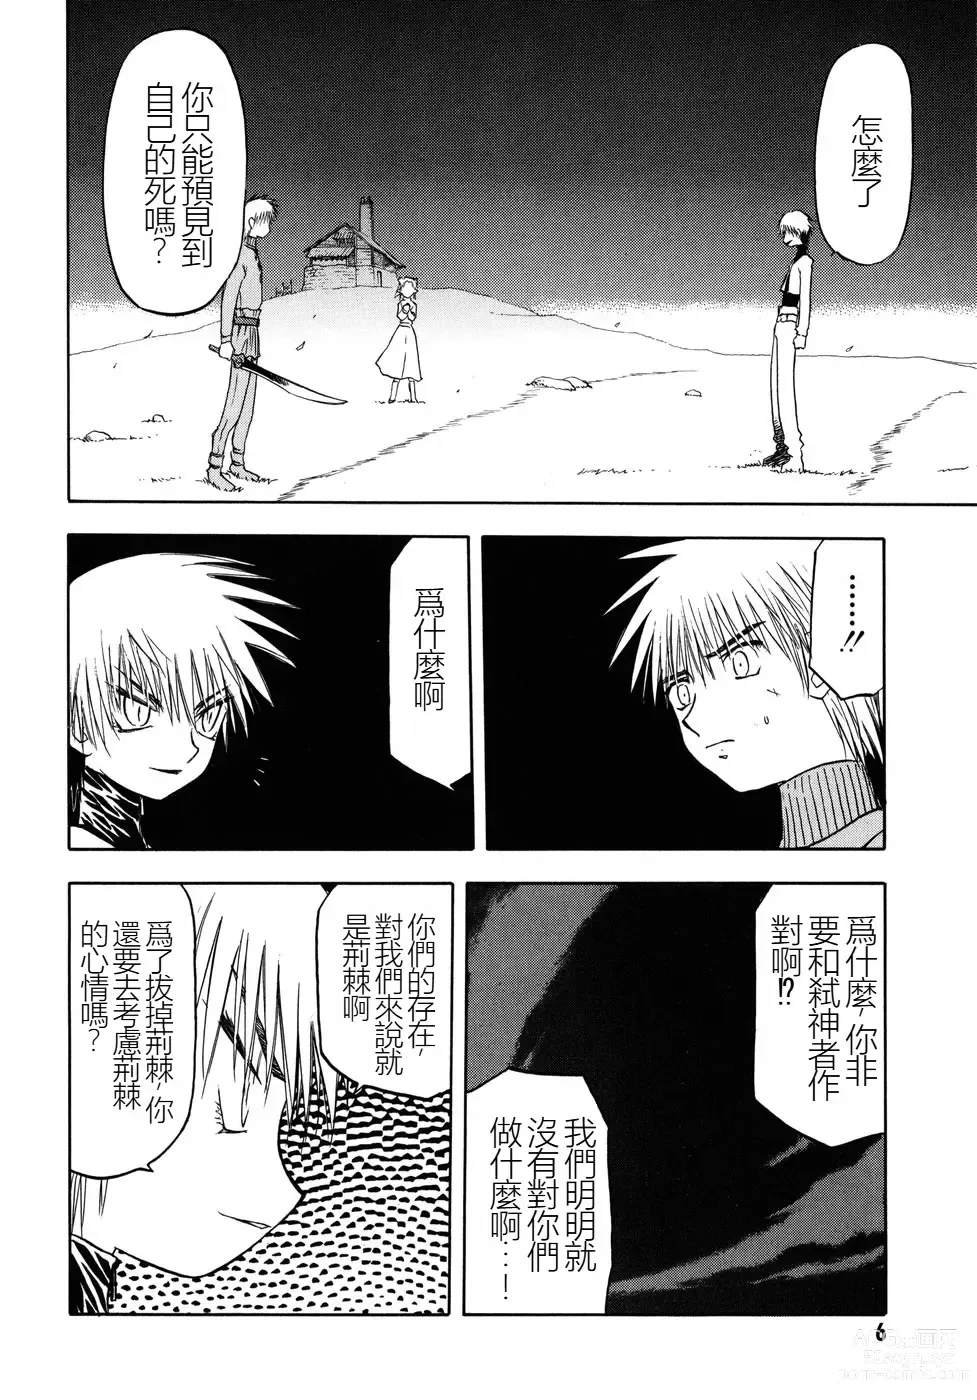 Page 9 of manga EDENs BOwY 16